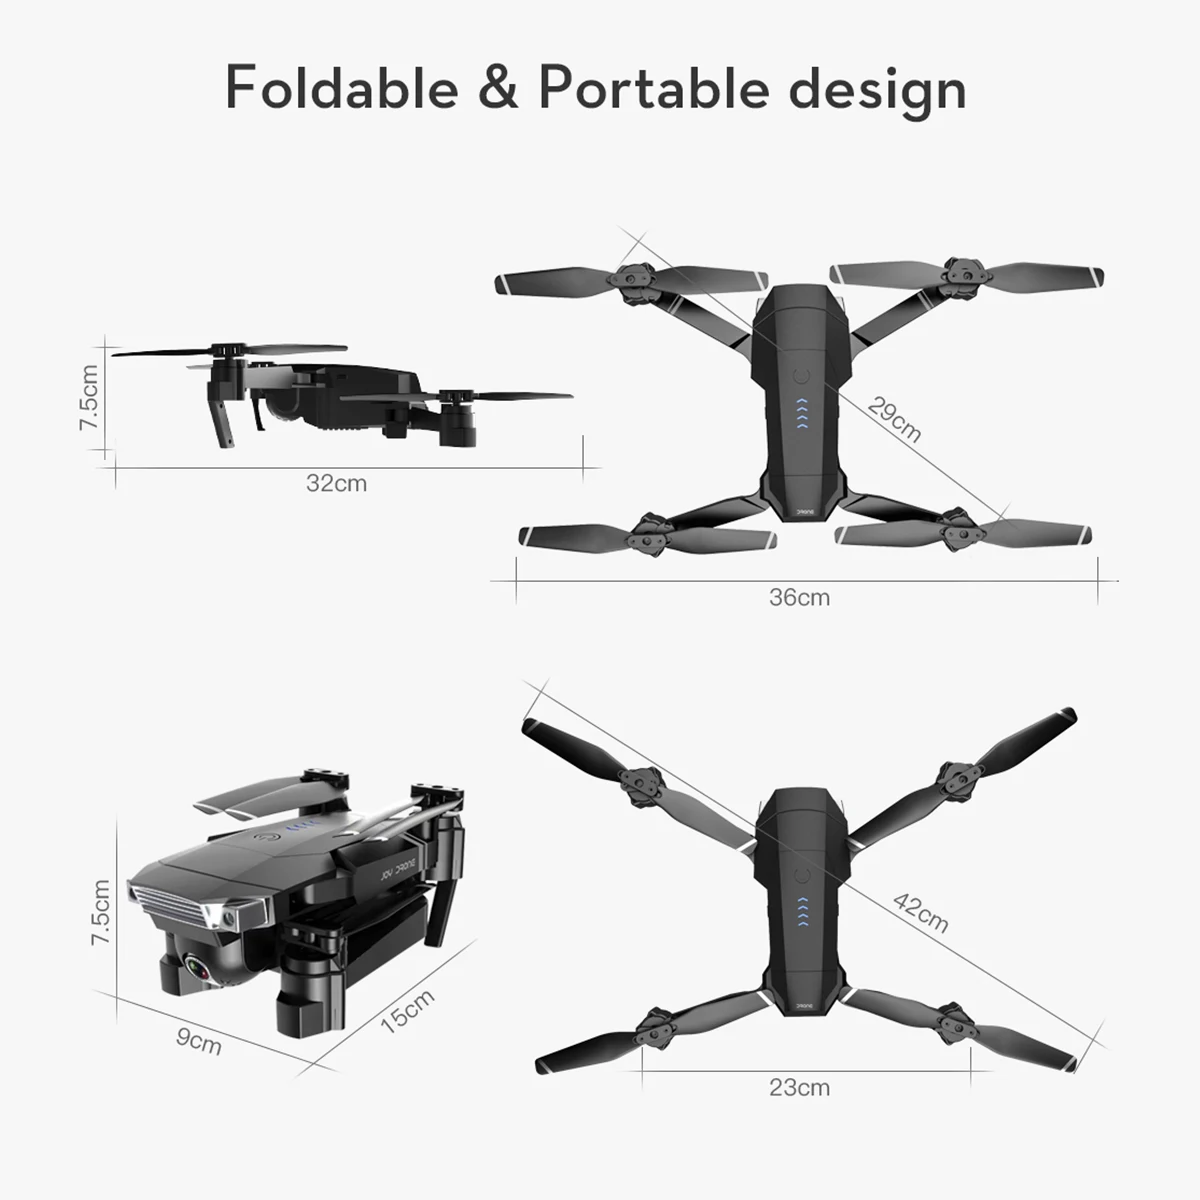 SG901 Camera mini Drone 4K HD Dual Camera Drones Follow Me Quadcopter FPV Professional GPS Long Battery Life dron toys